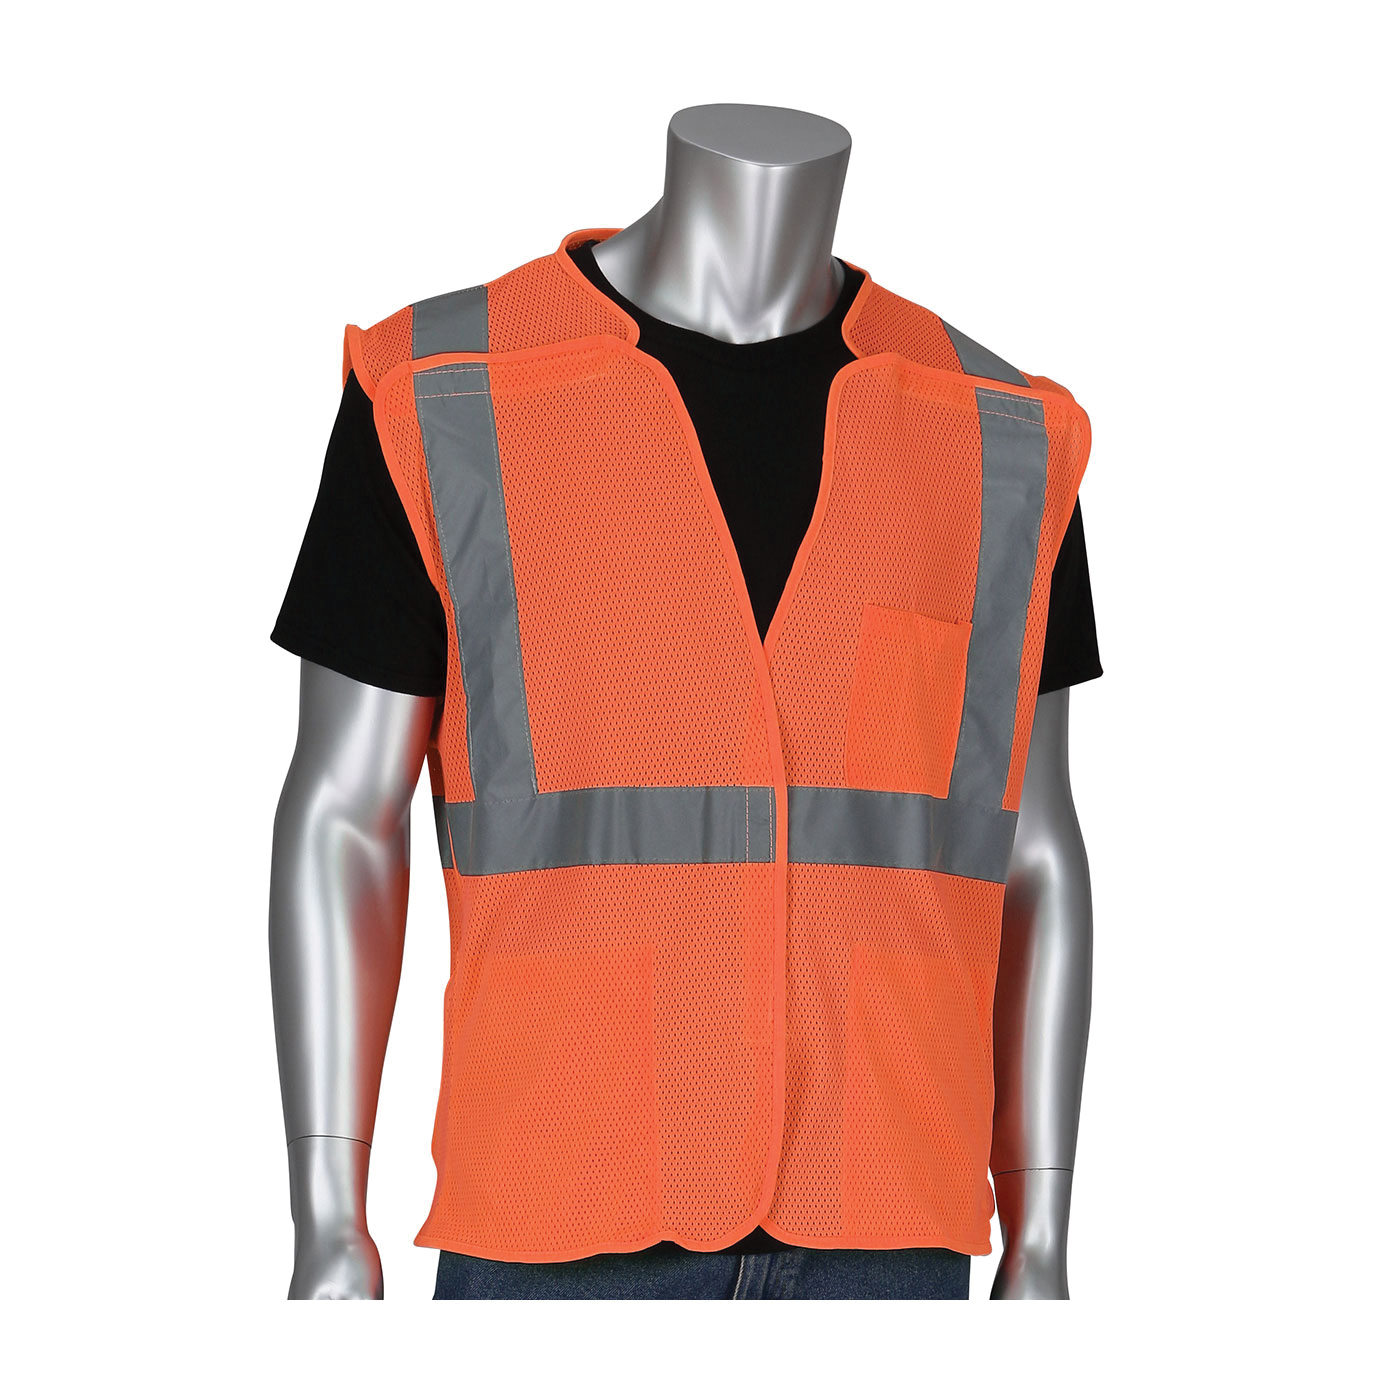 PIP® 302-5PMVOR-S Safety Vest, S, Hi-Viz Orange, Polyester, Hook and Loop Closure, 3 Pockets, ANSI Class: Class 2, Specifications Met: ANSI 107 Type R